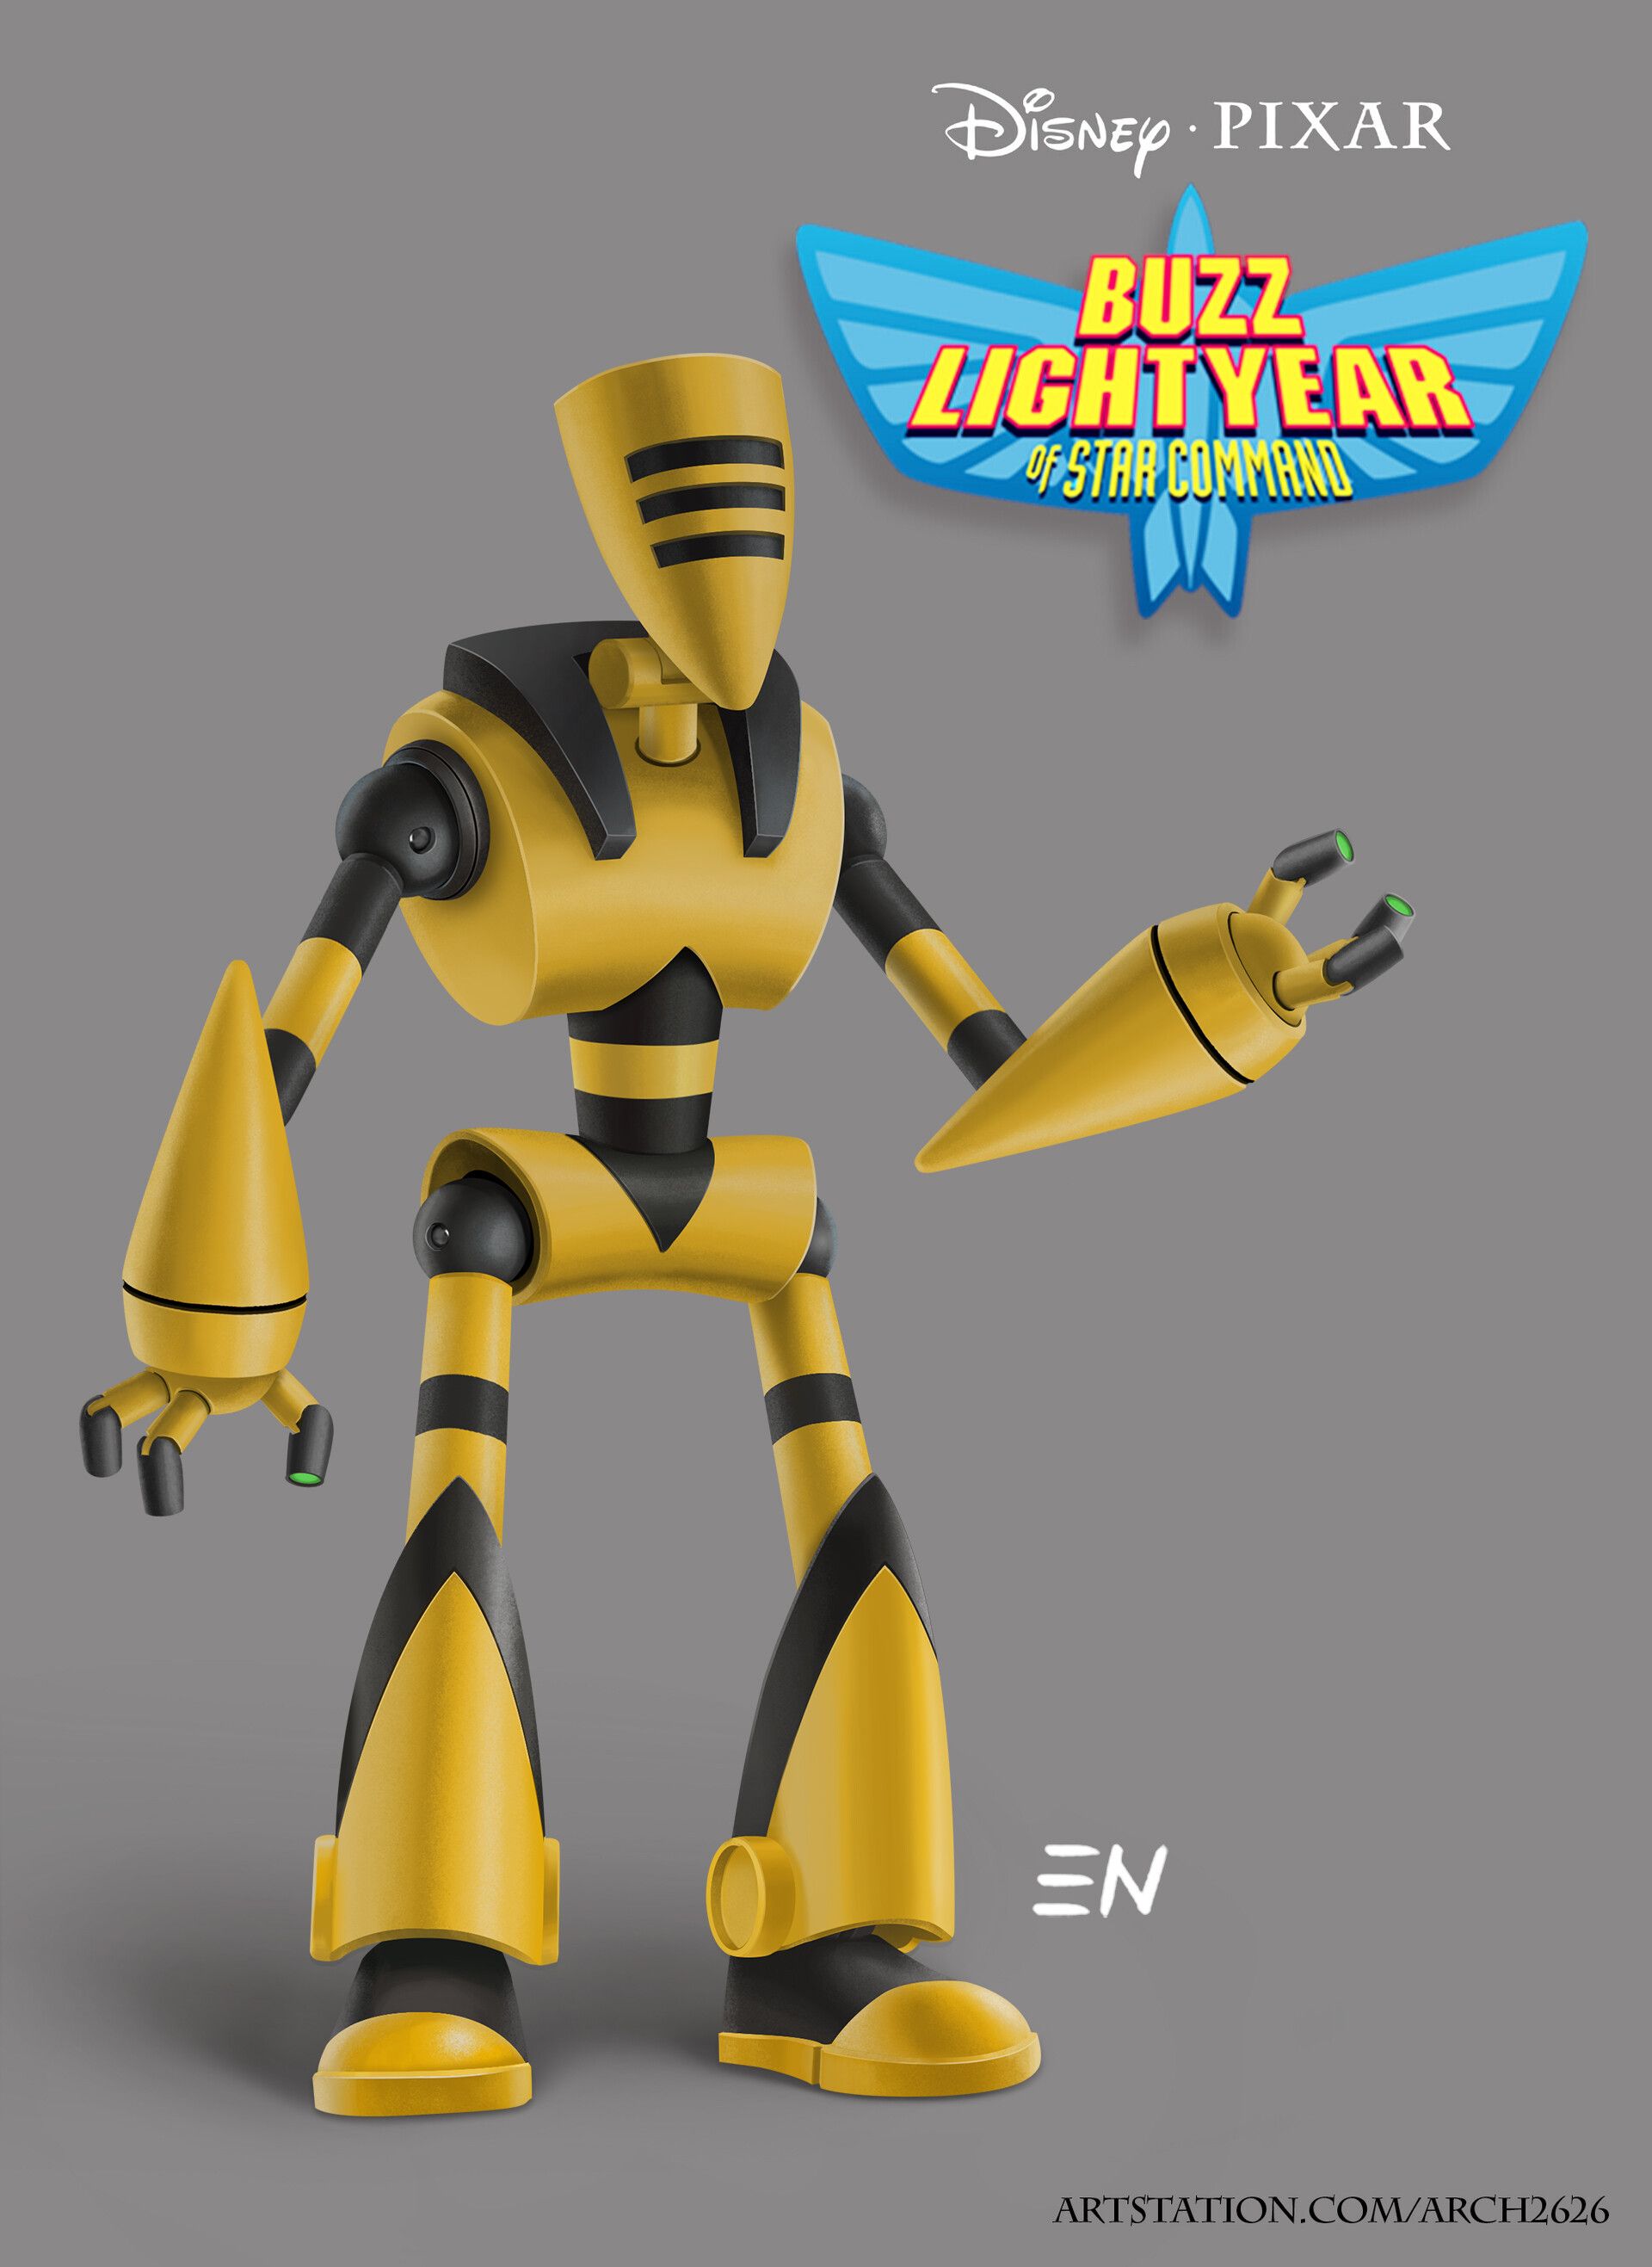 Buzz lightyear of star command robot